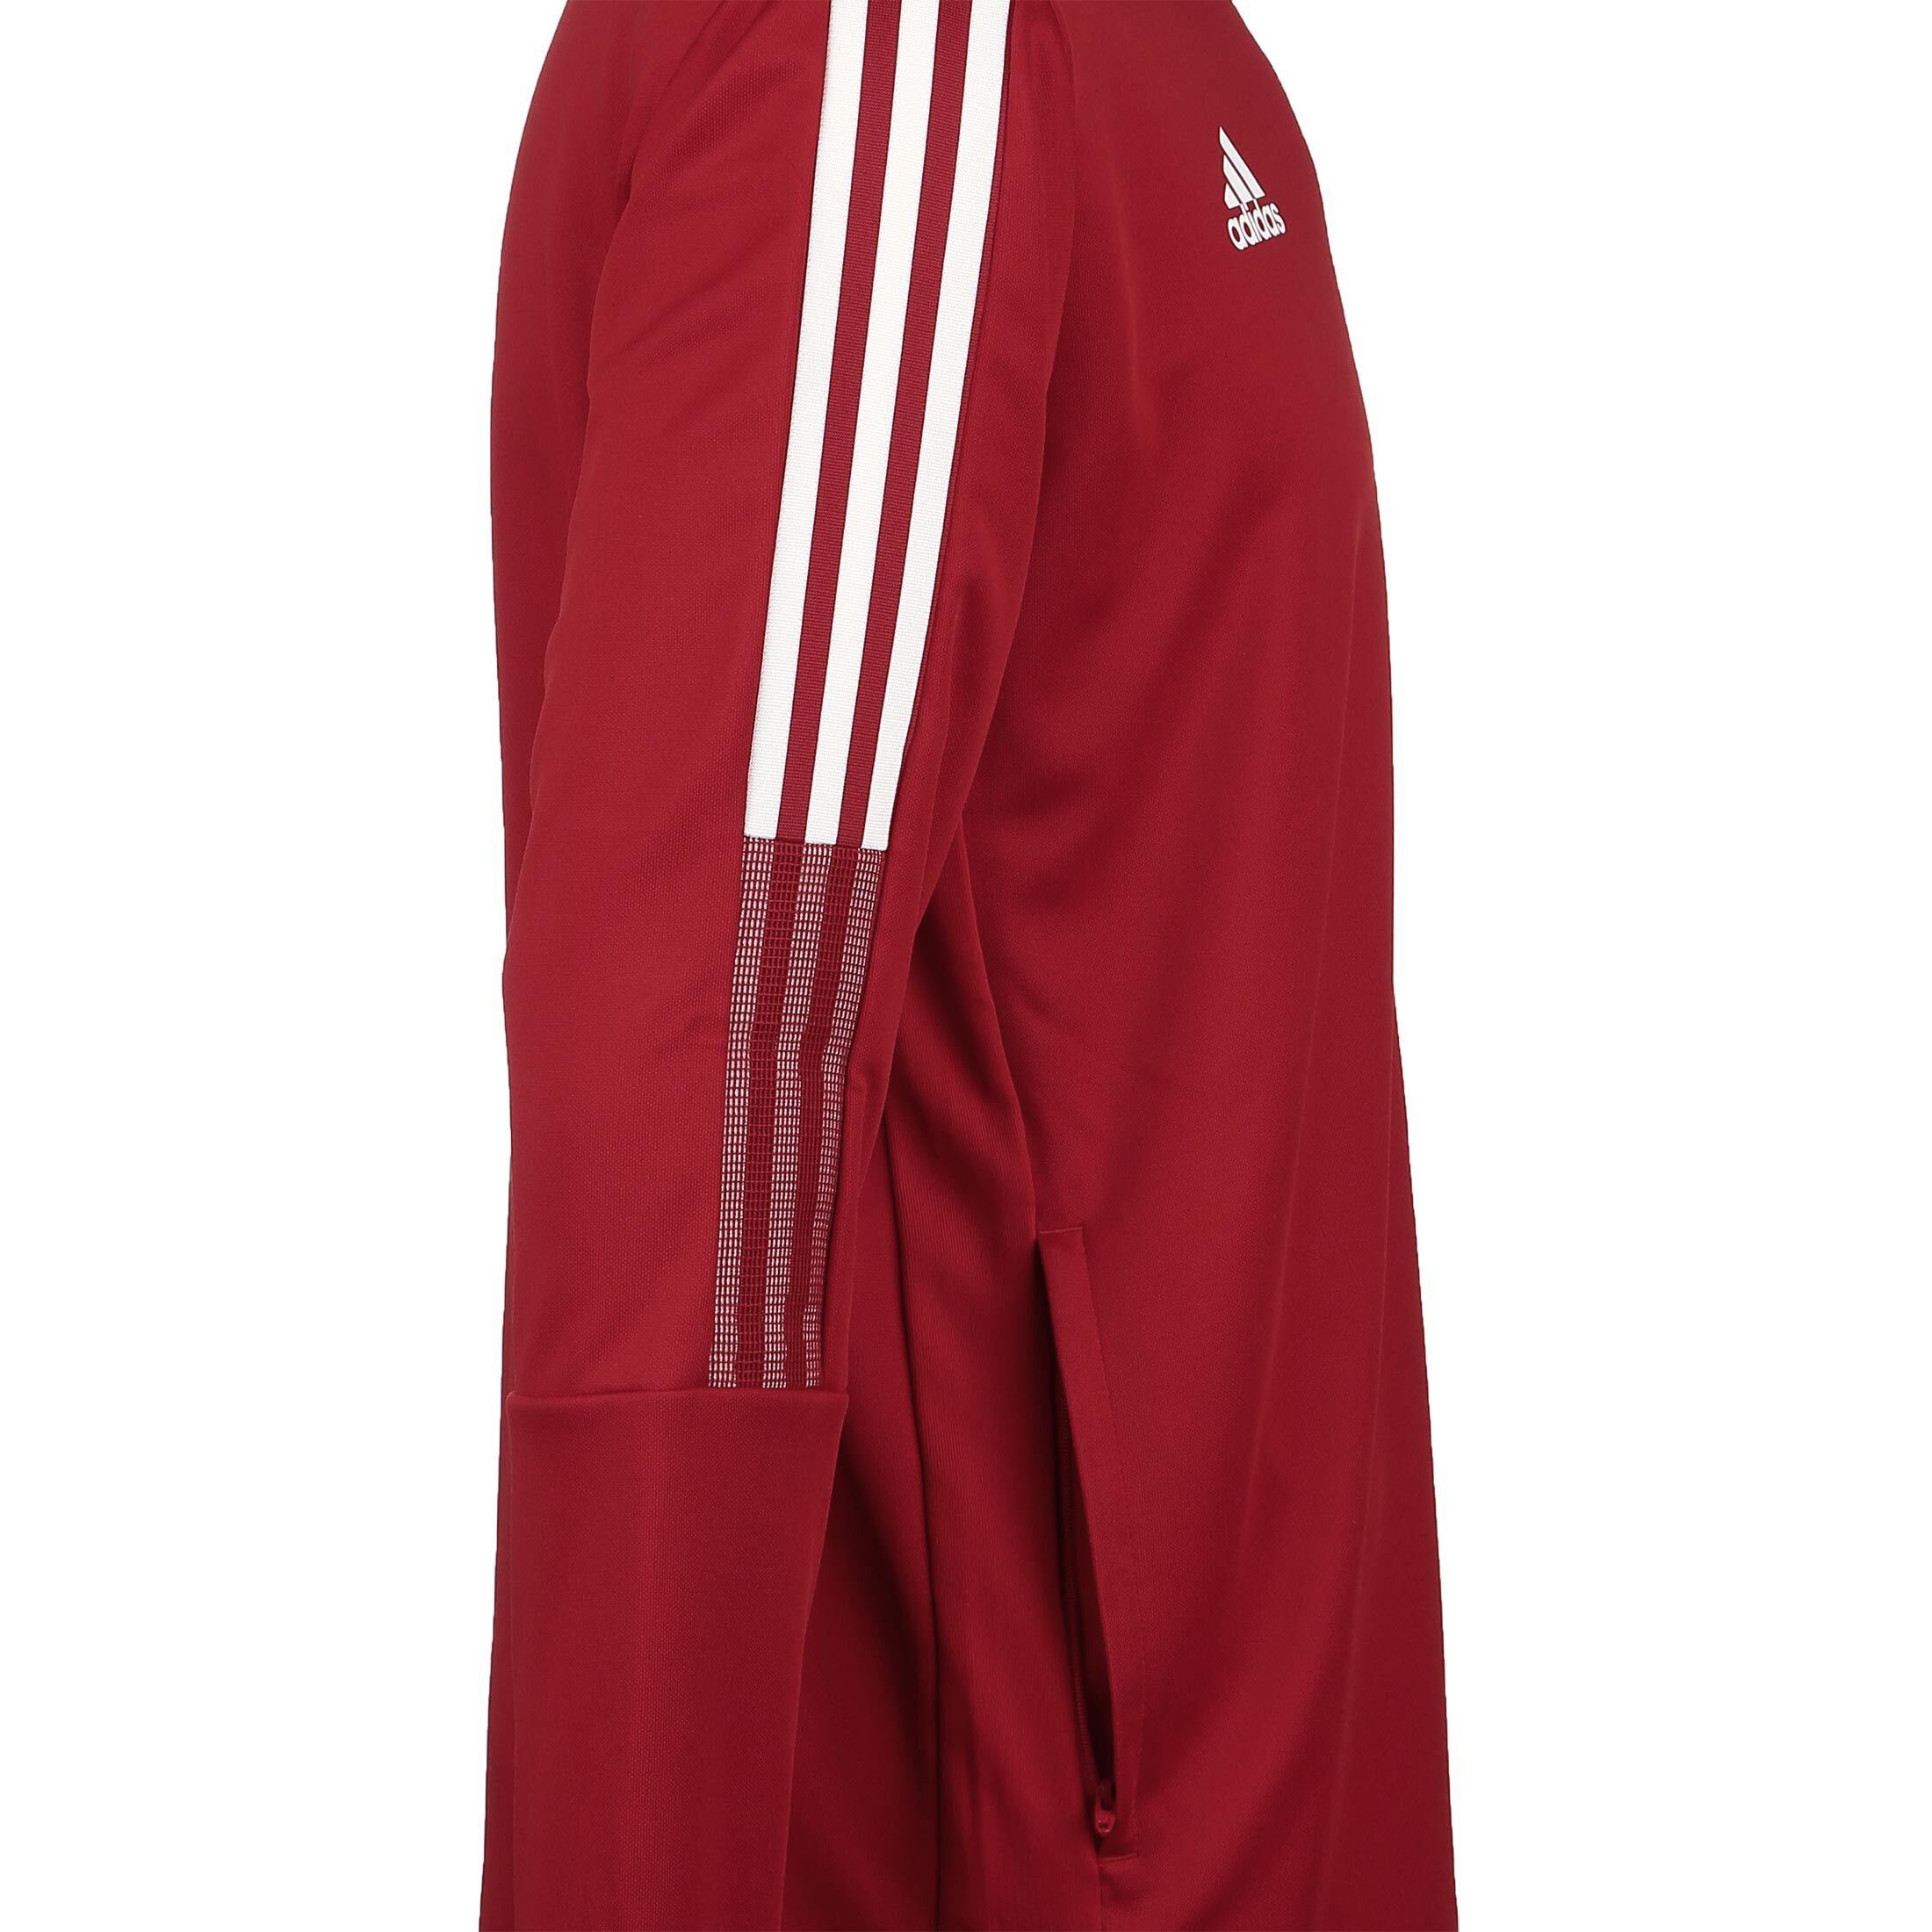 adidas Performance Sweatjacke Trainingsjacke rot weiß Herren 21 / Tiro